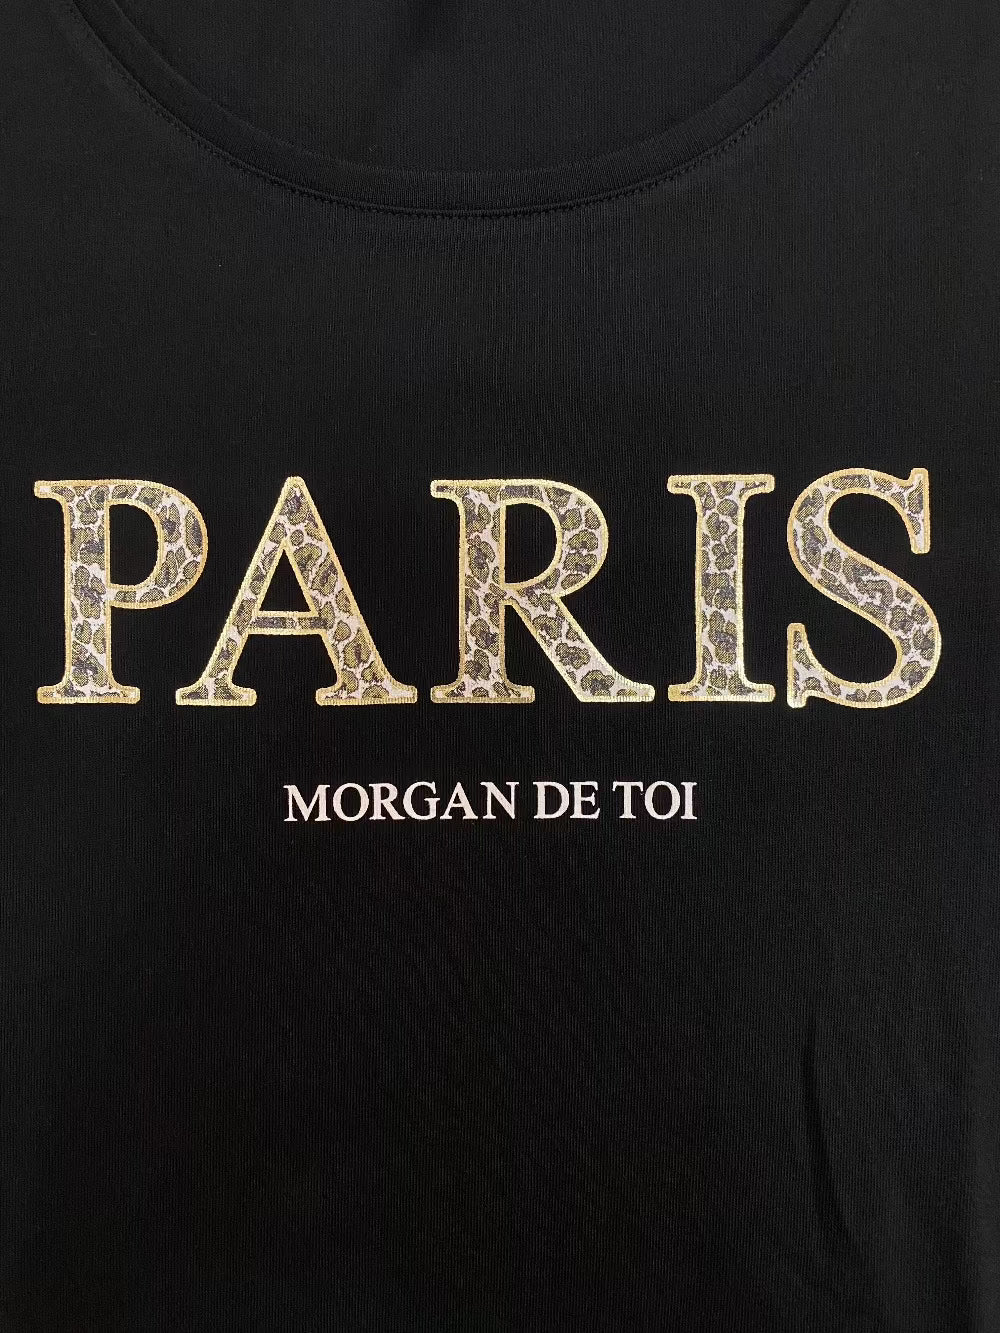 Morgan de toi t-shirt nera dettaglio